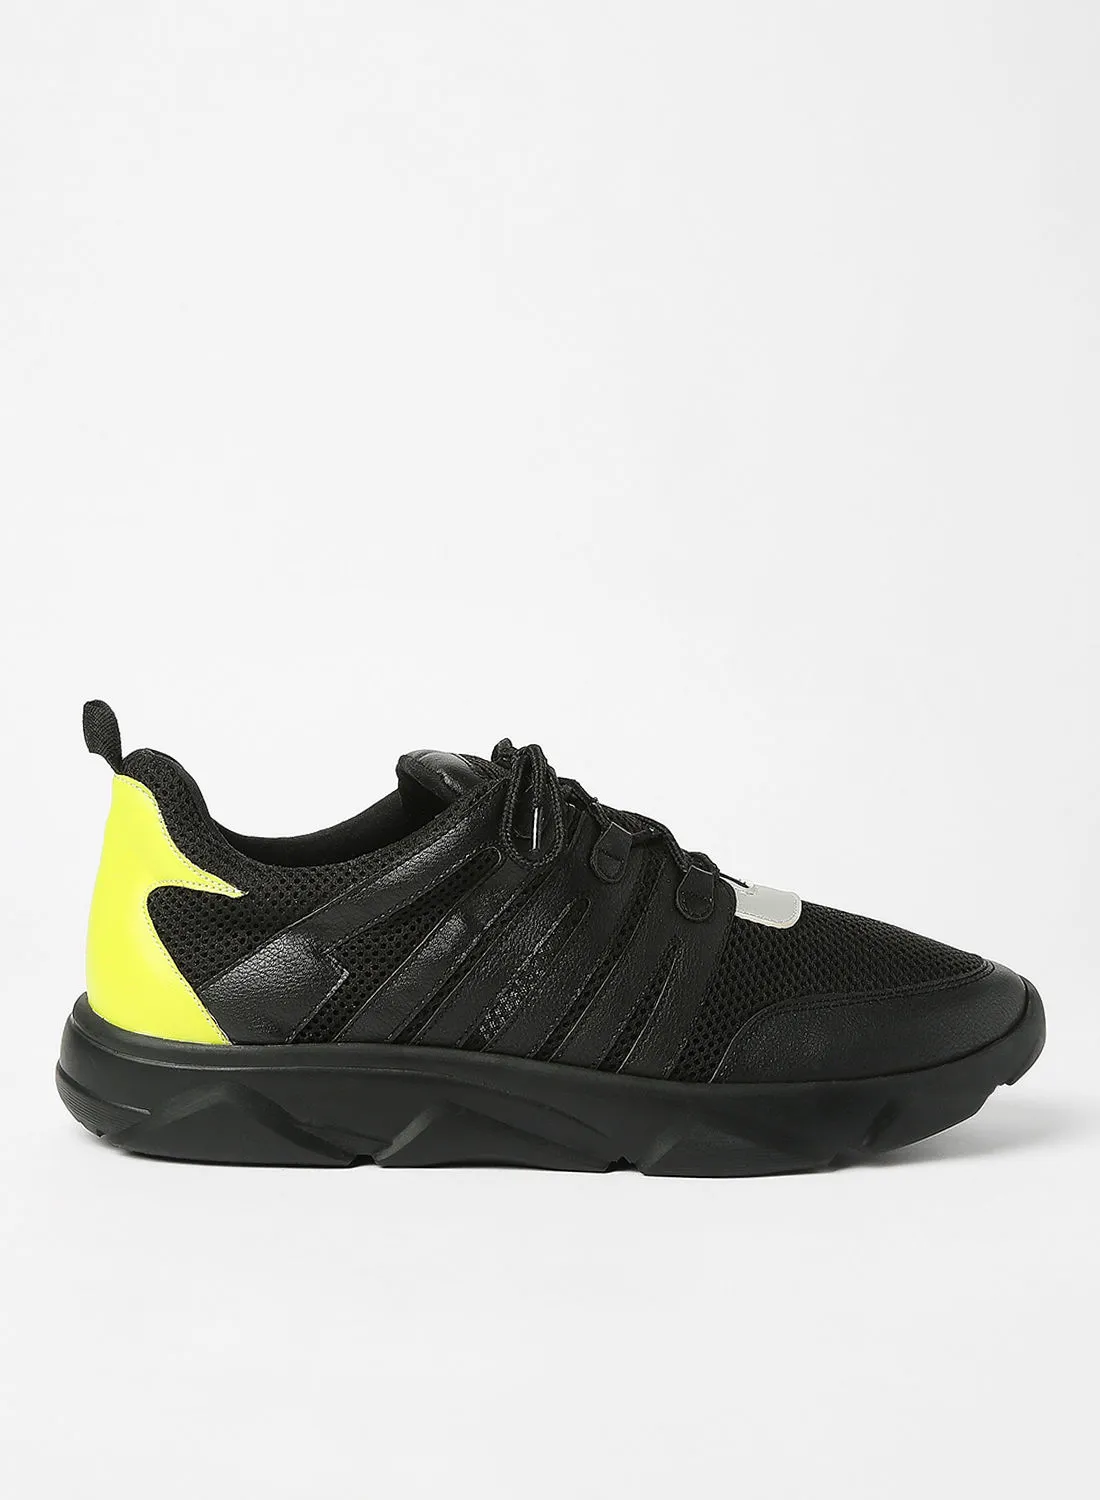 STATE 8 Mesh Low Top Sneakers Black/Yellow